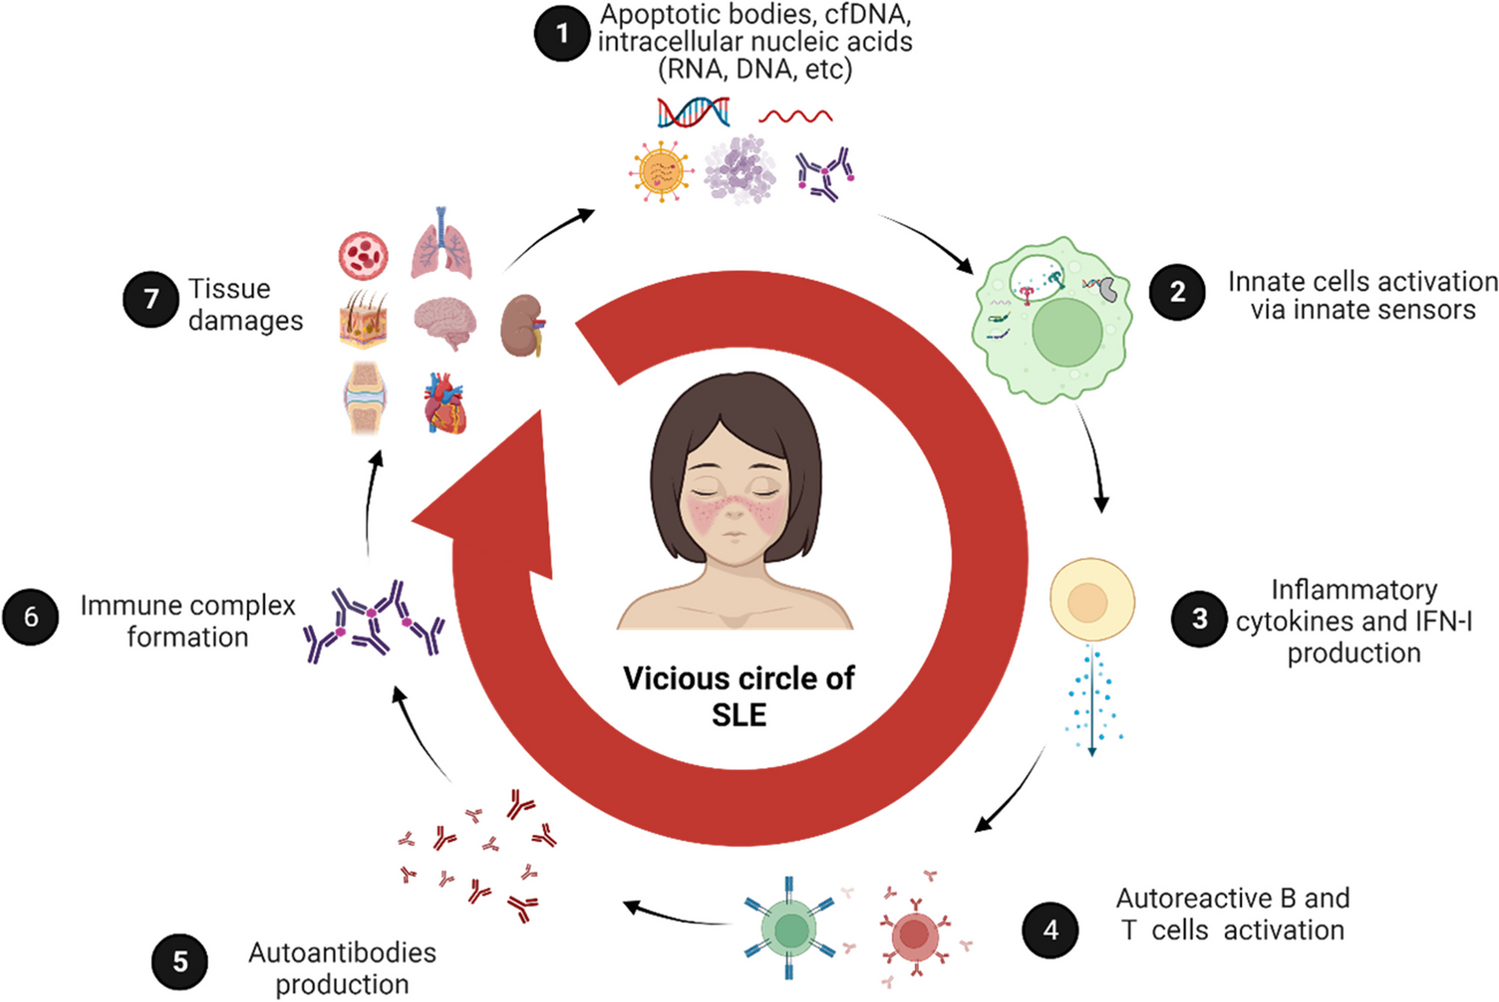 Mendelian Causes of Autoimmunity: the Lupus Phenotype